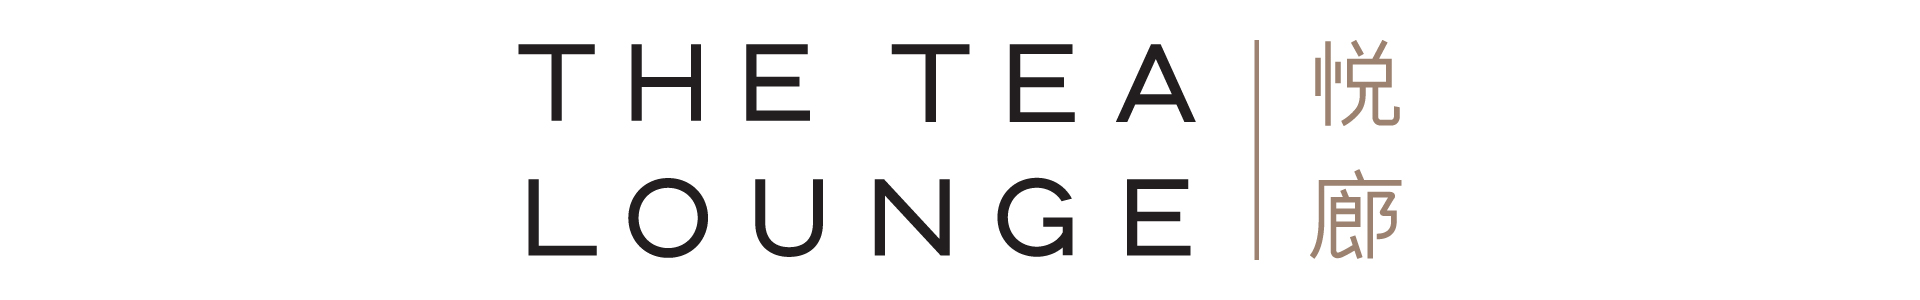 the tea lounge logo